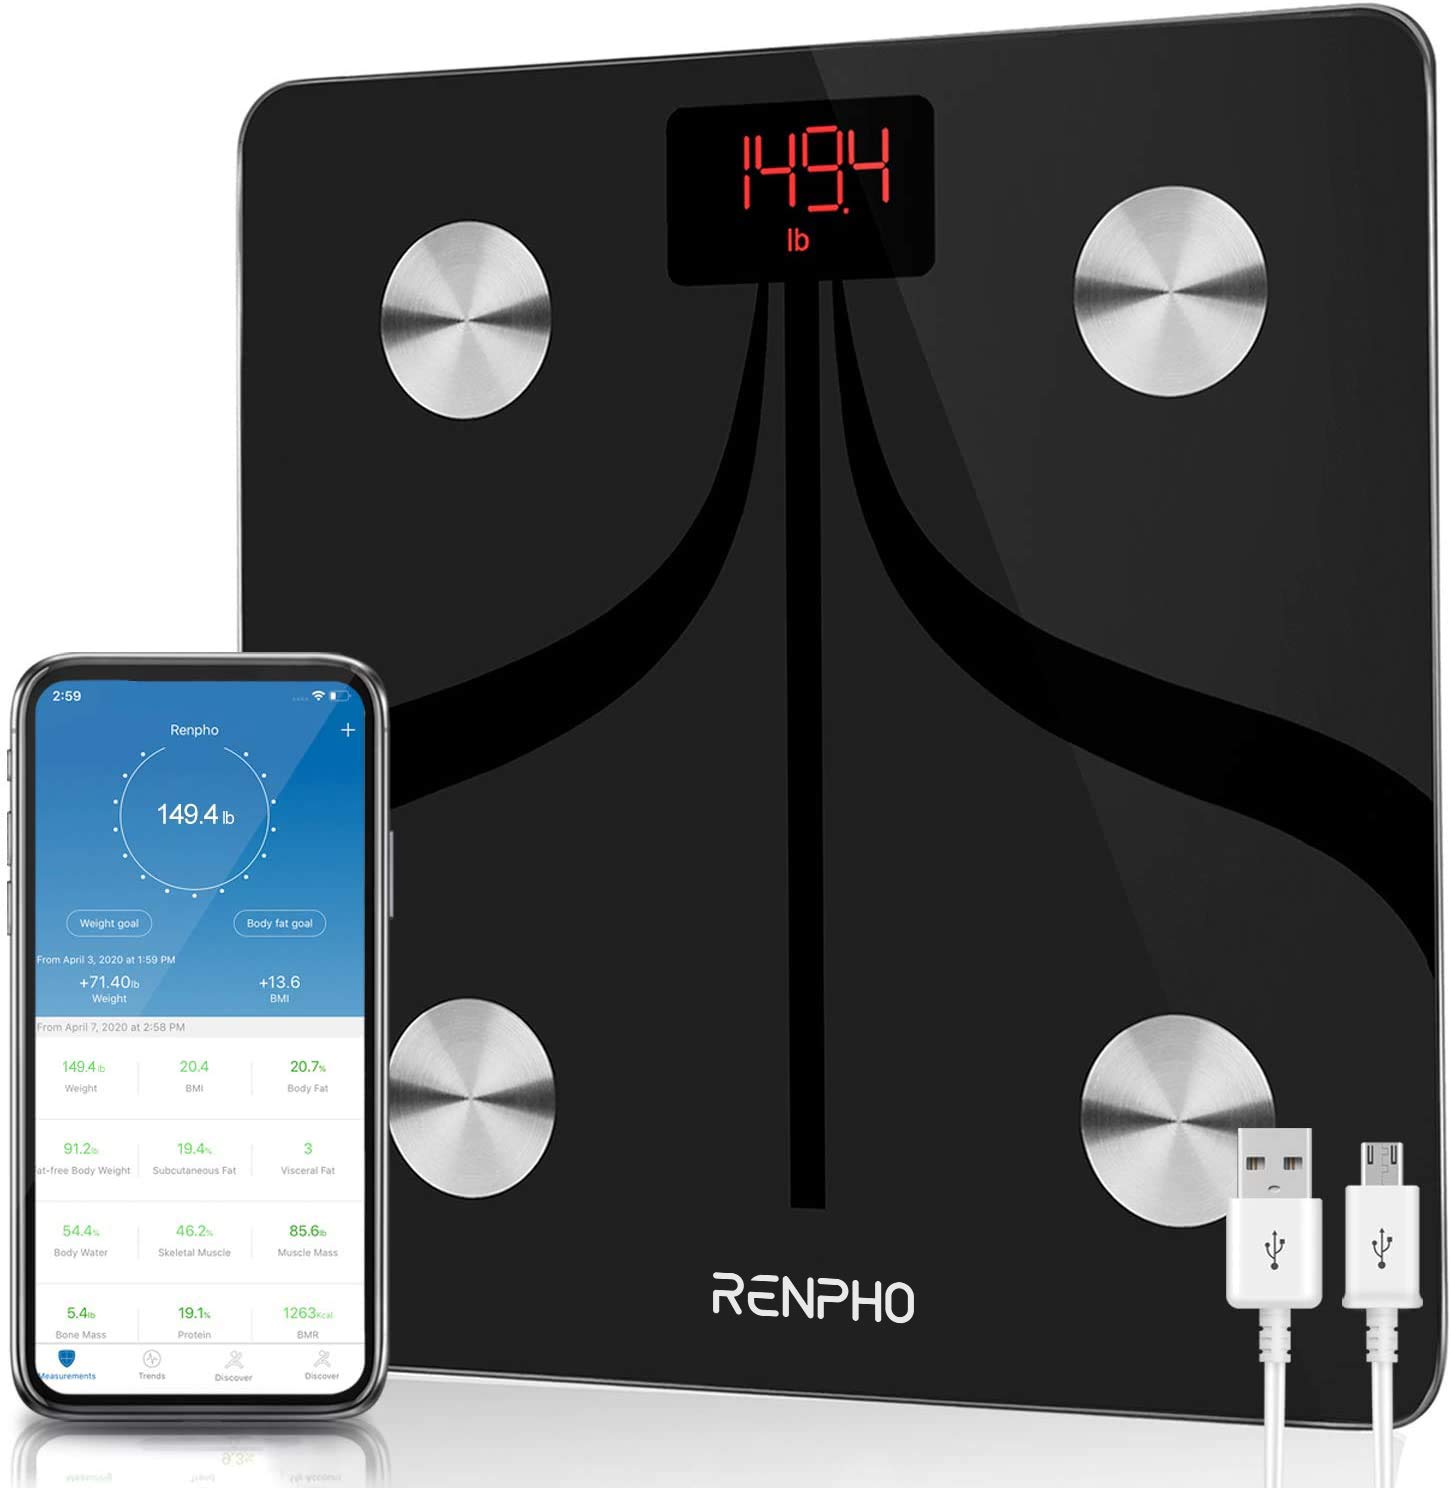 RENPHO Bluetooth Body Fat Scale Digital Weight Scale Bathroom